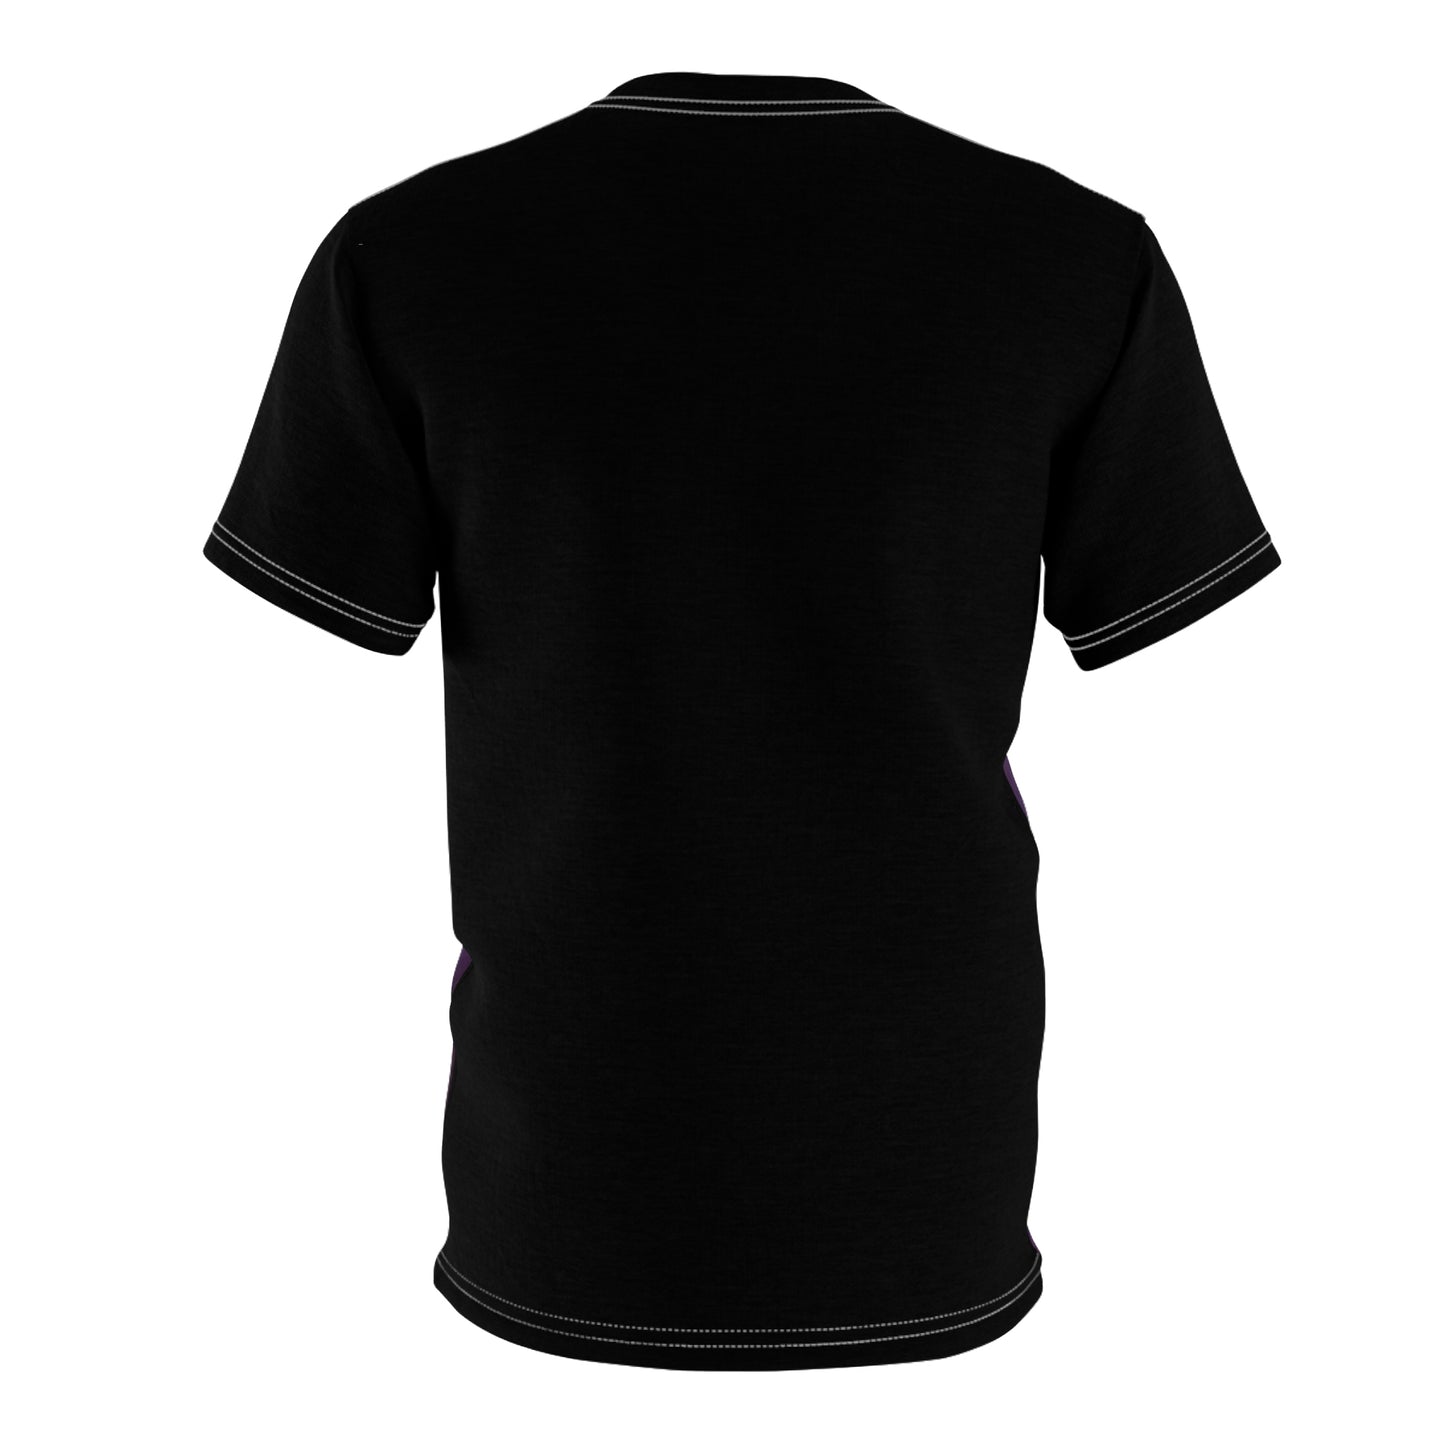 Origin Of Shadow - Unisex All-Over Print Cut & Sew T-Shirt